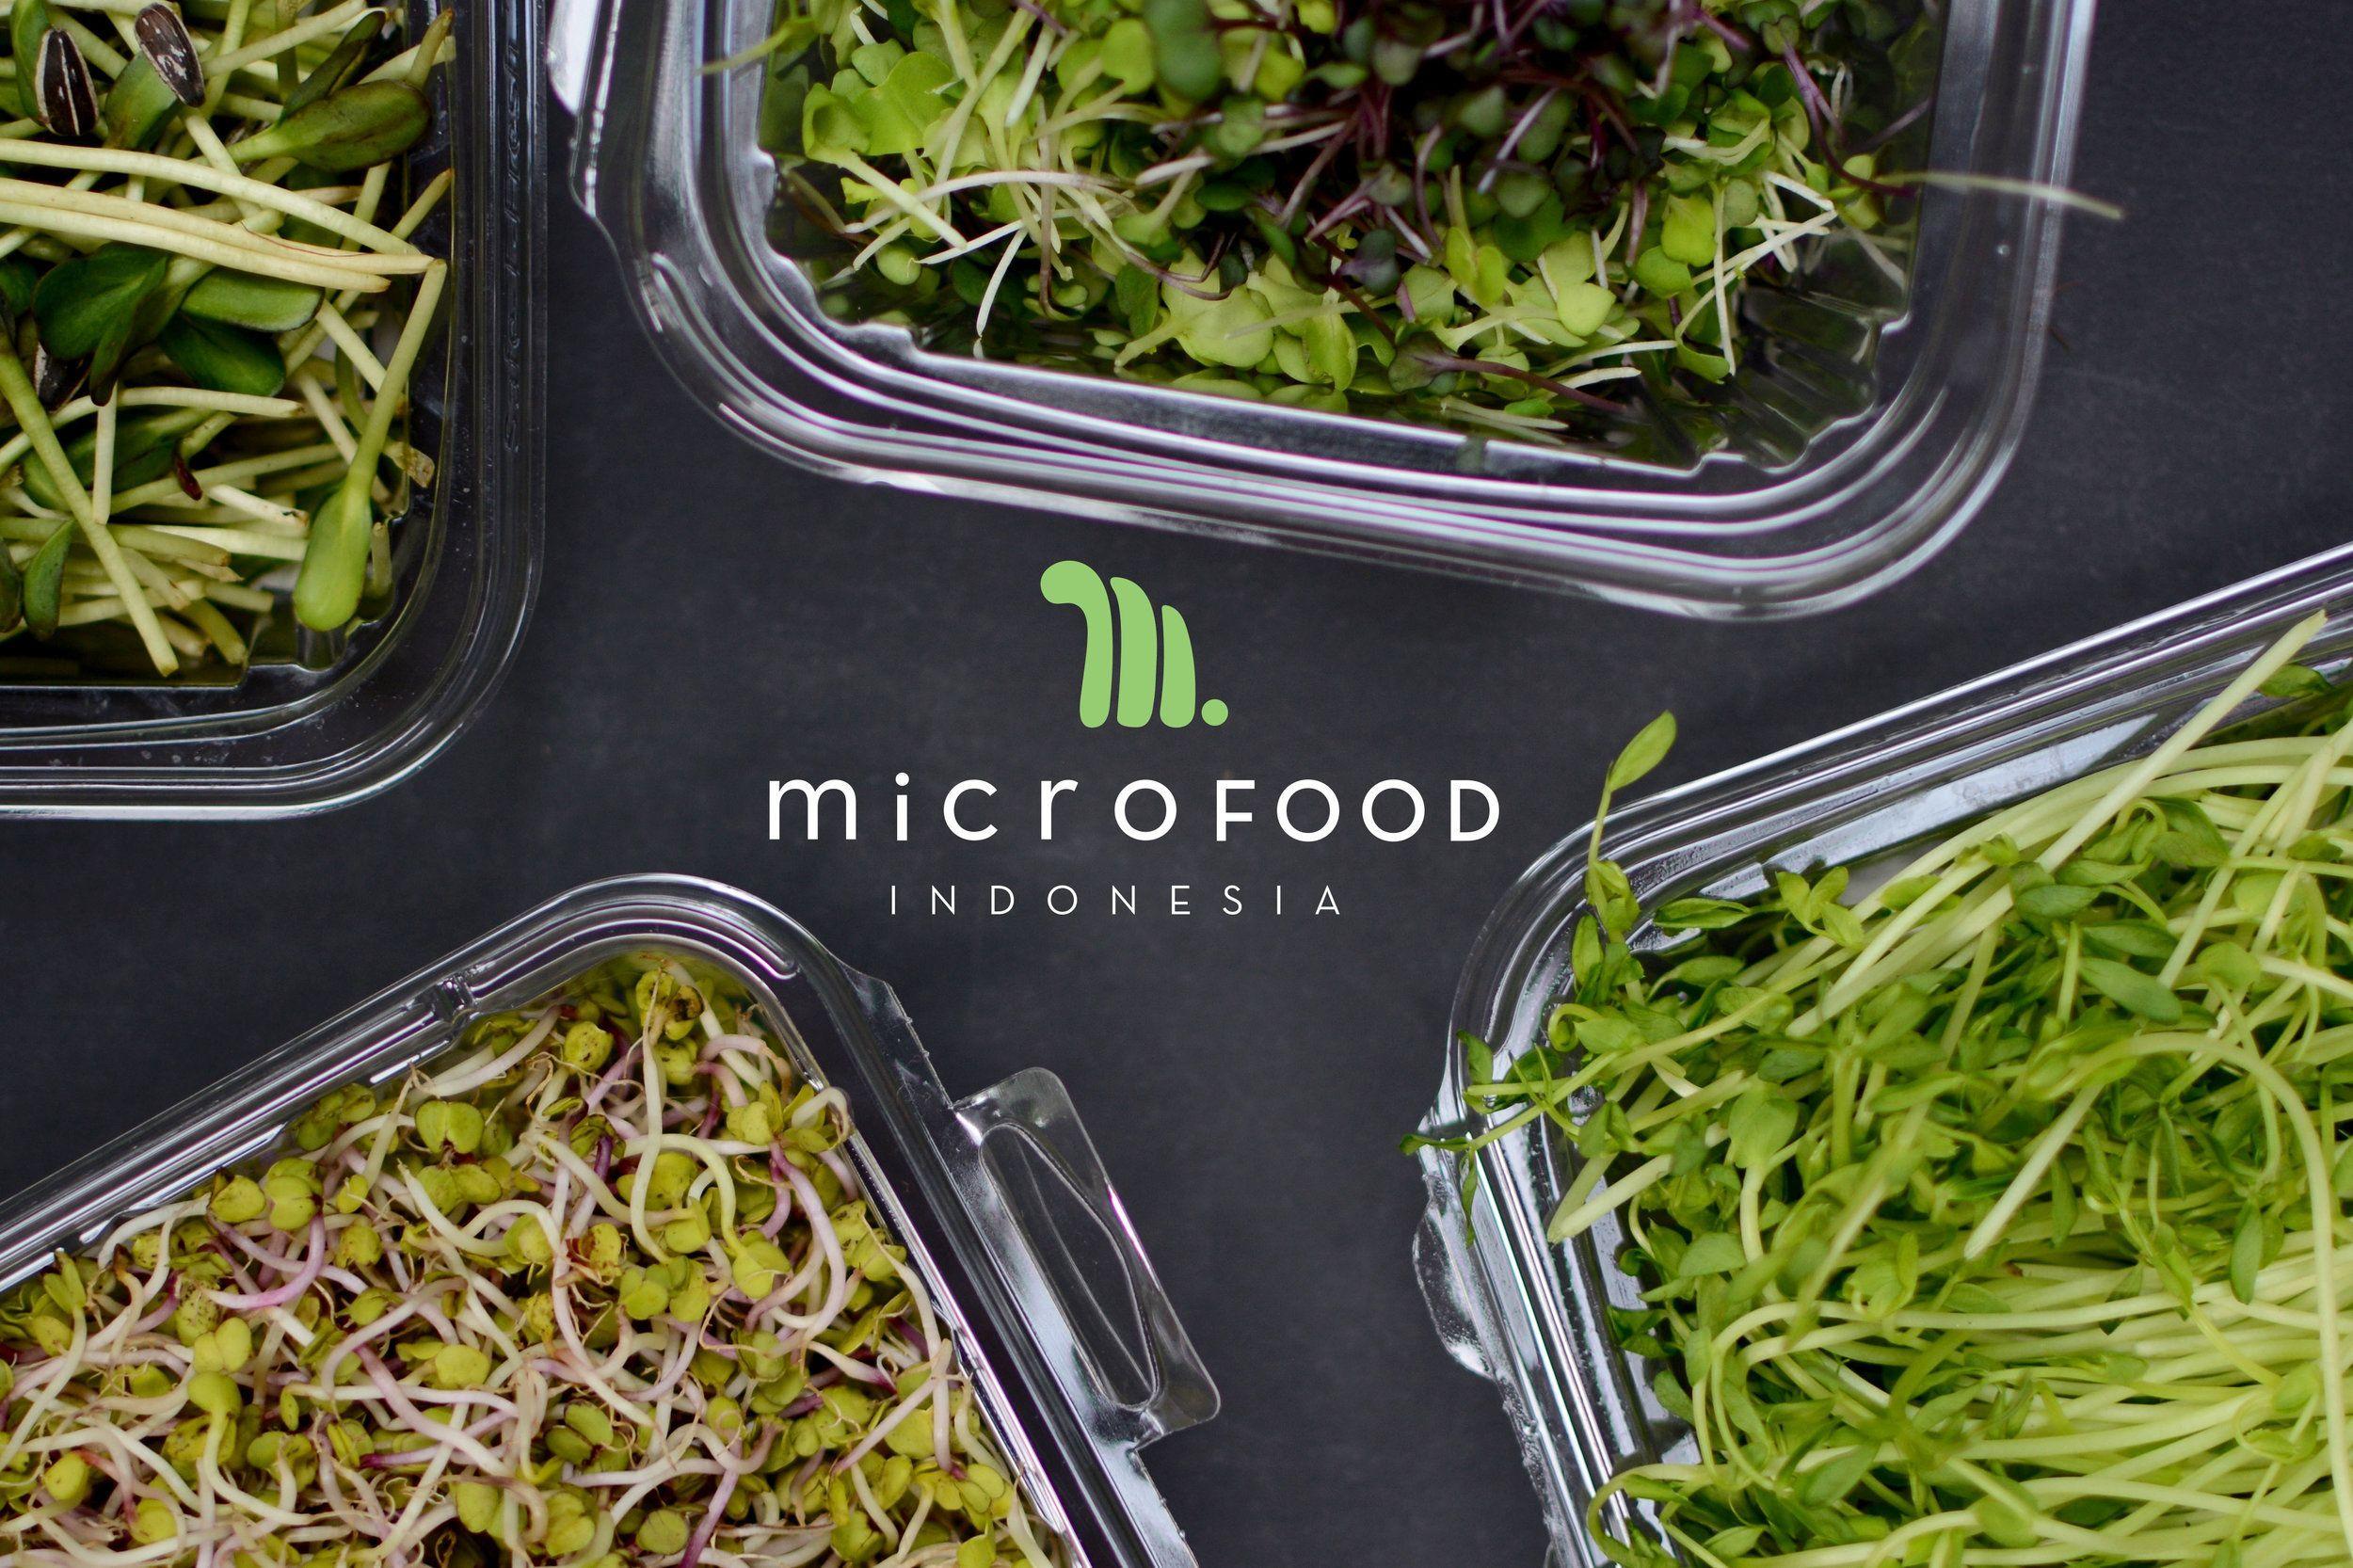 Microgreens Logo - Microfood Logo #logo #logodesign #microgreens www.sabikdesign.com ...